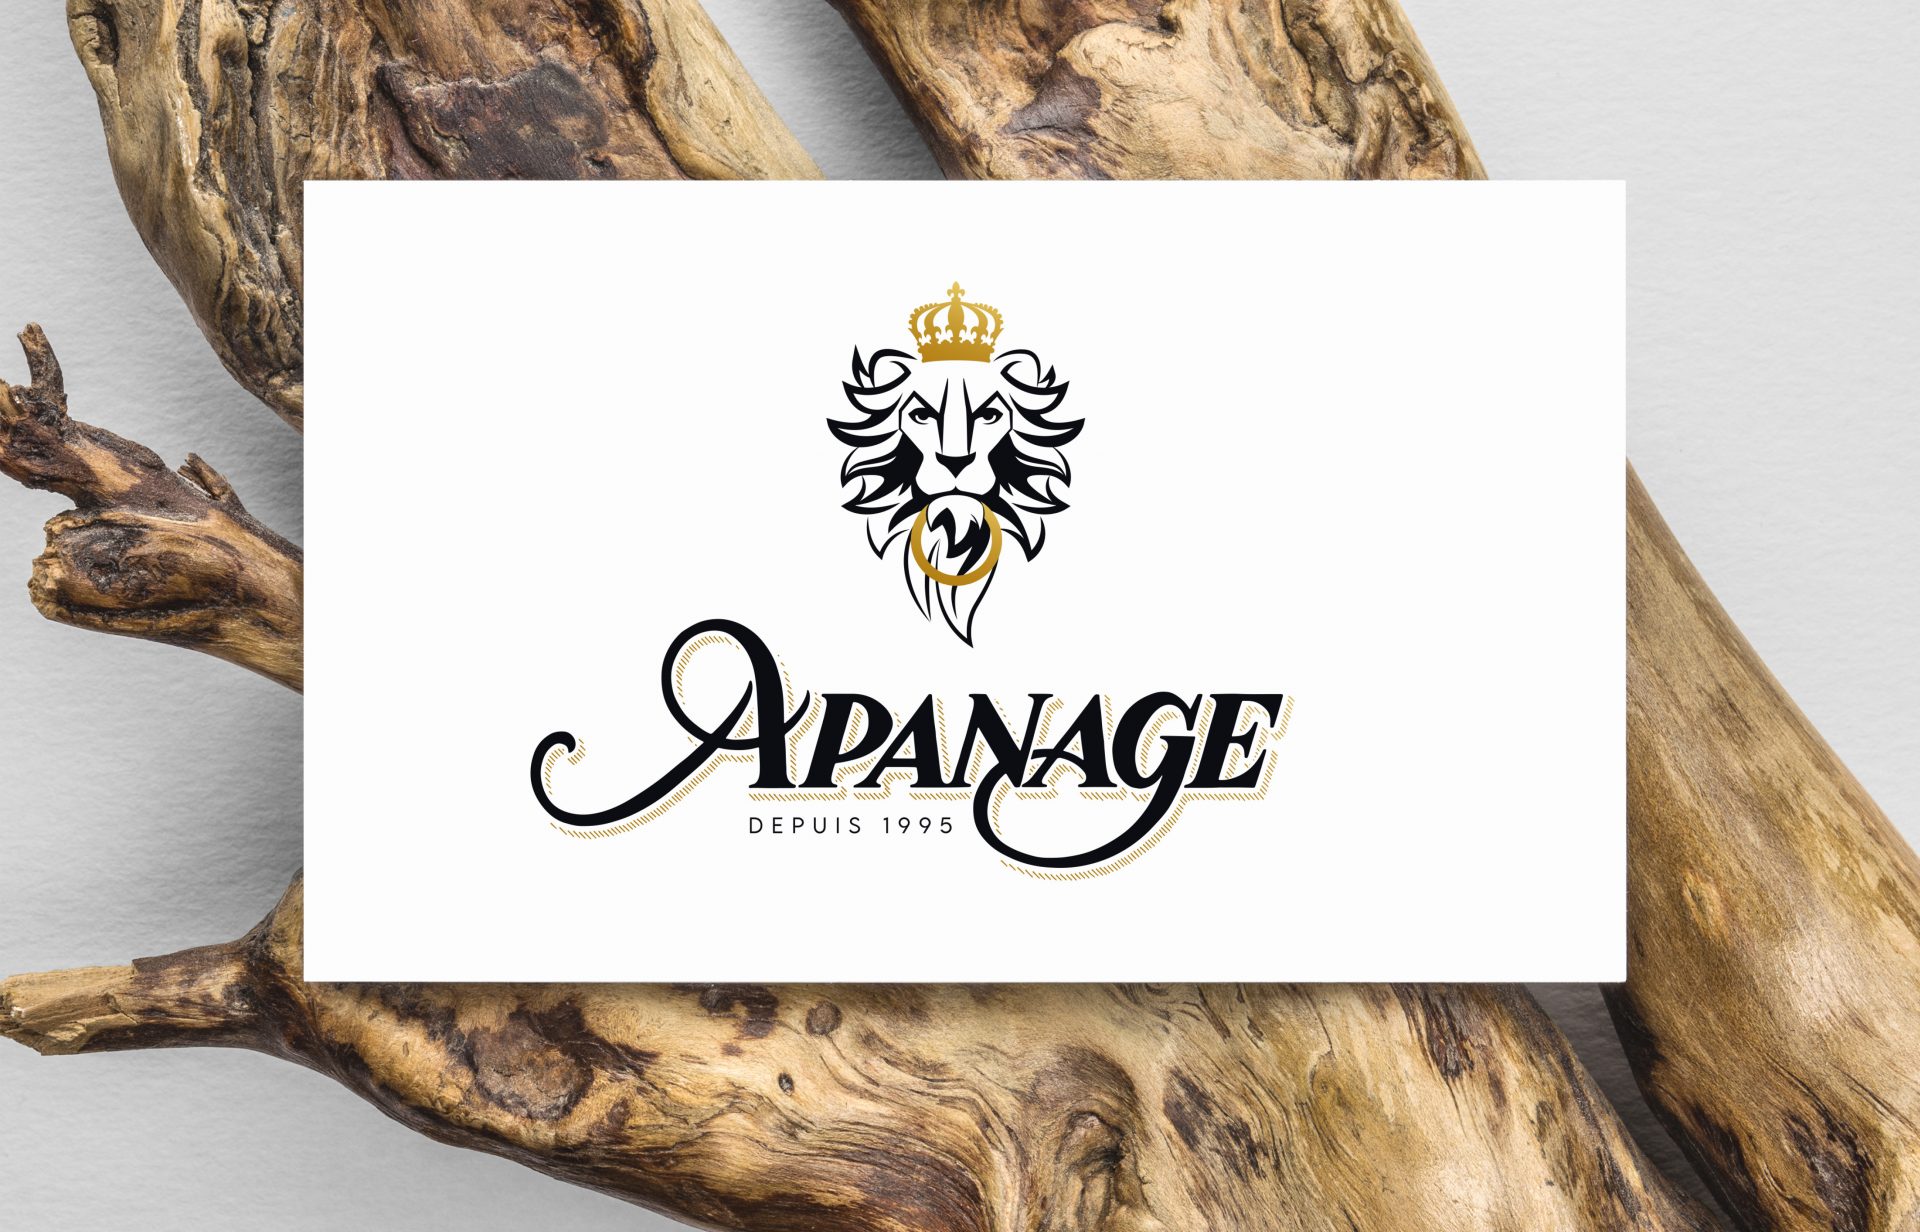 Apanage